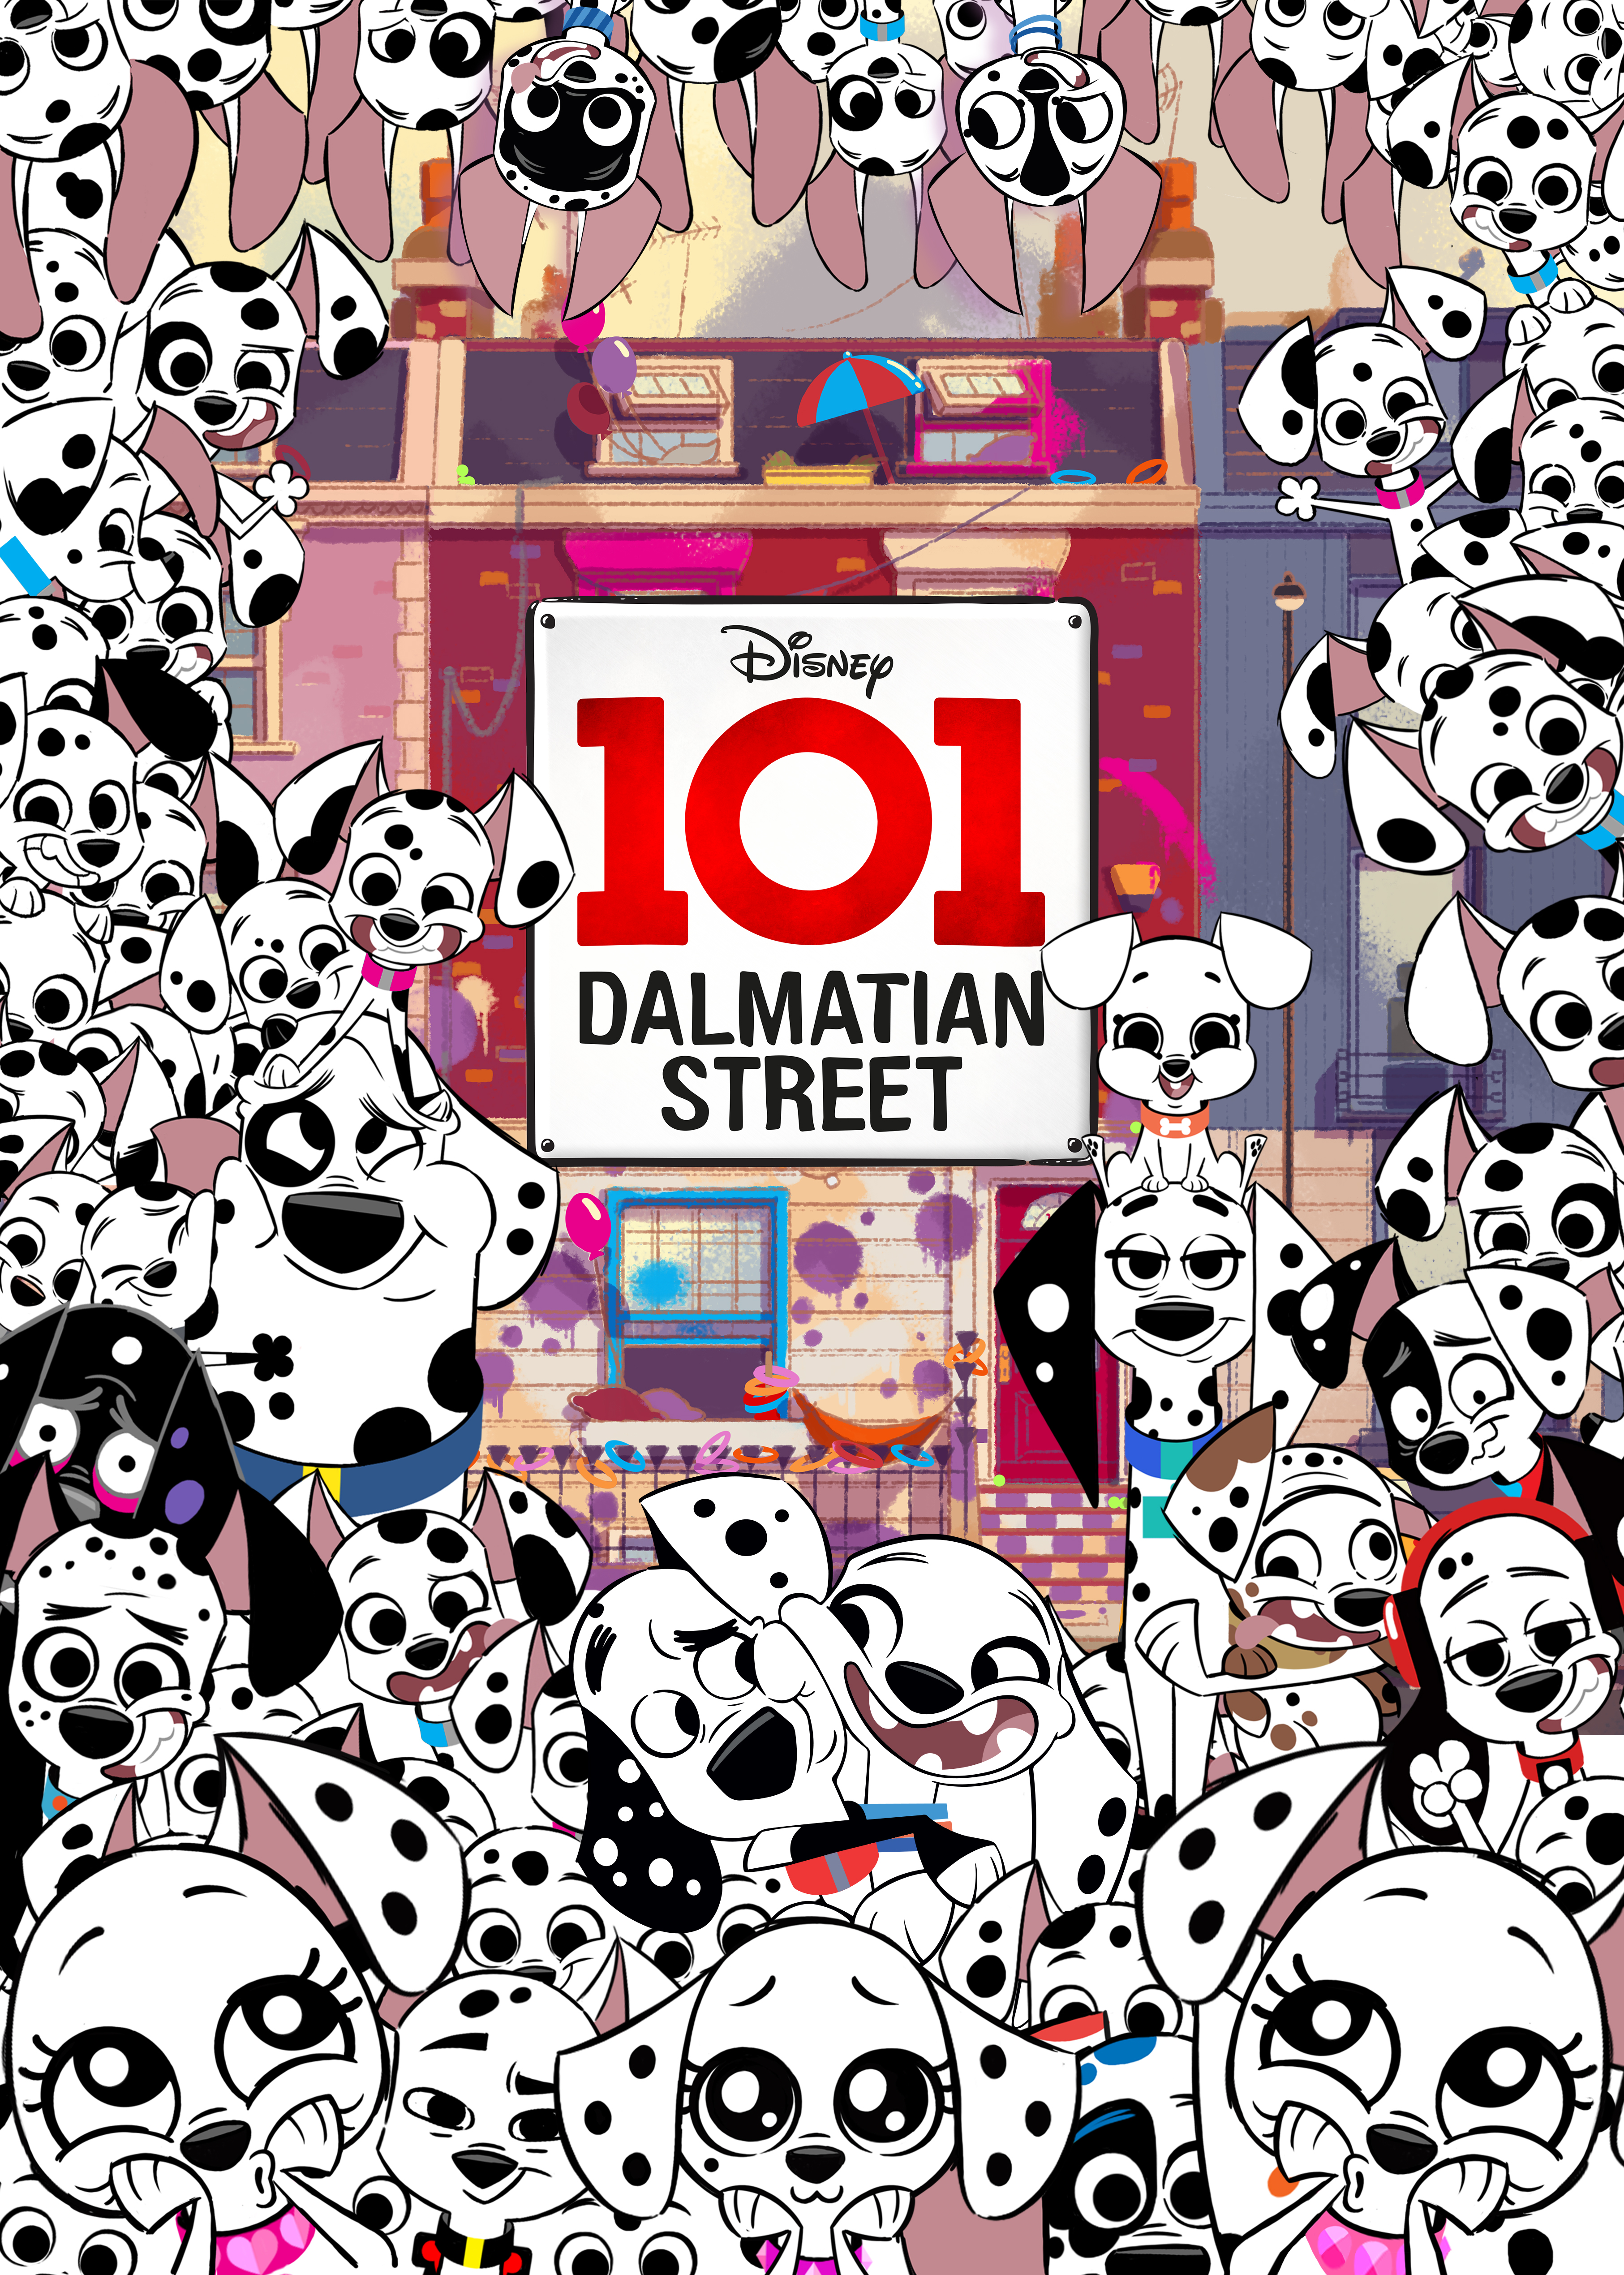 Disney 101 Dalmatian Street